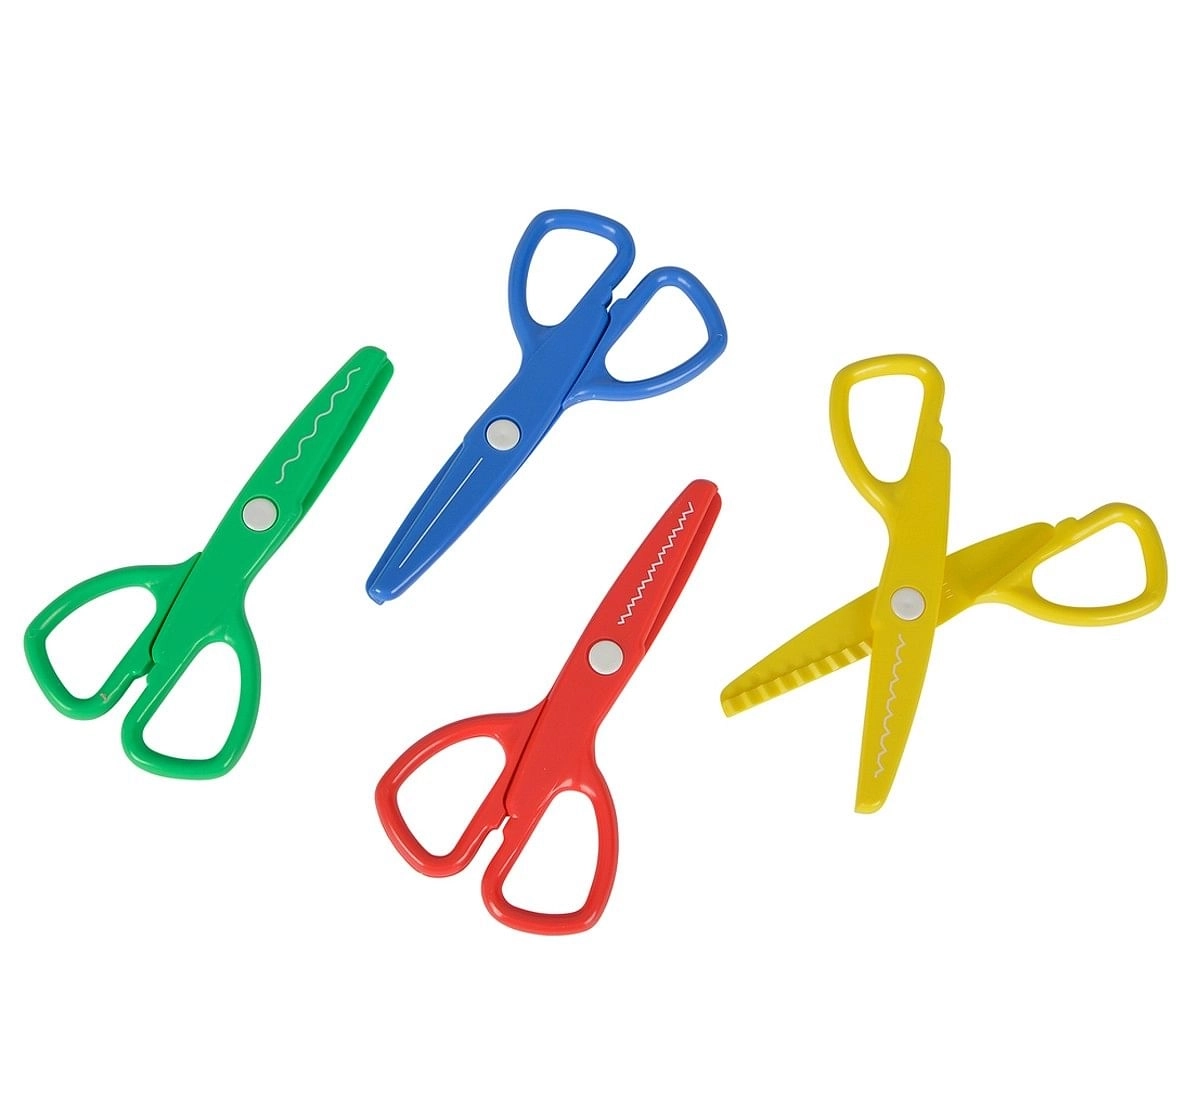 Simba Art and Fun 3 Scissors Multicolor 3Y+